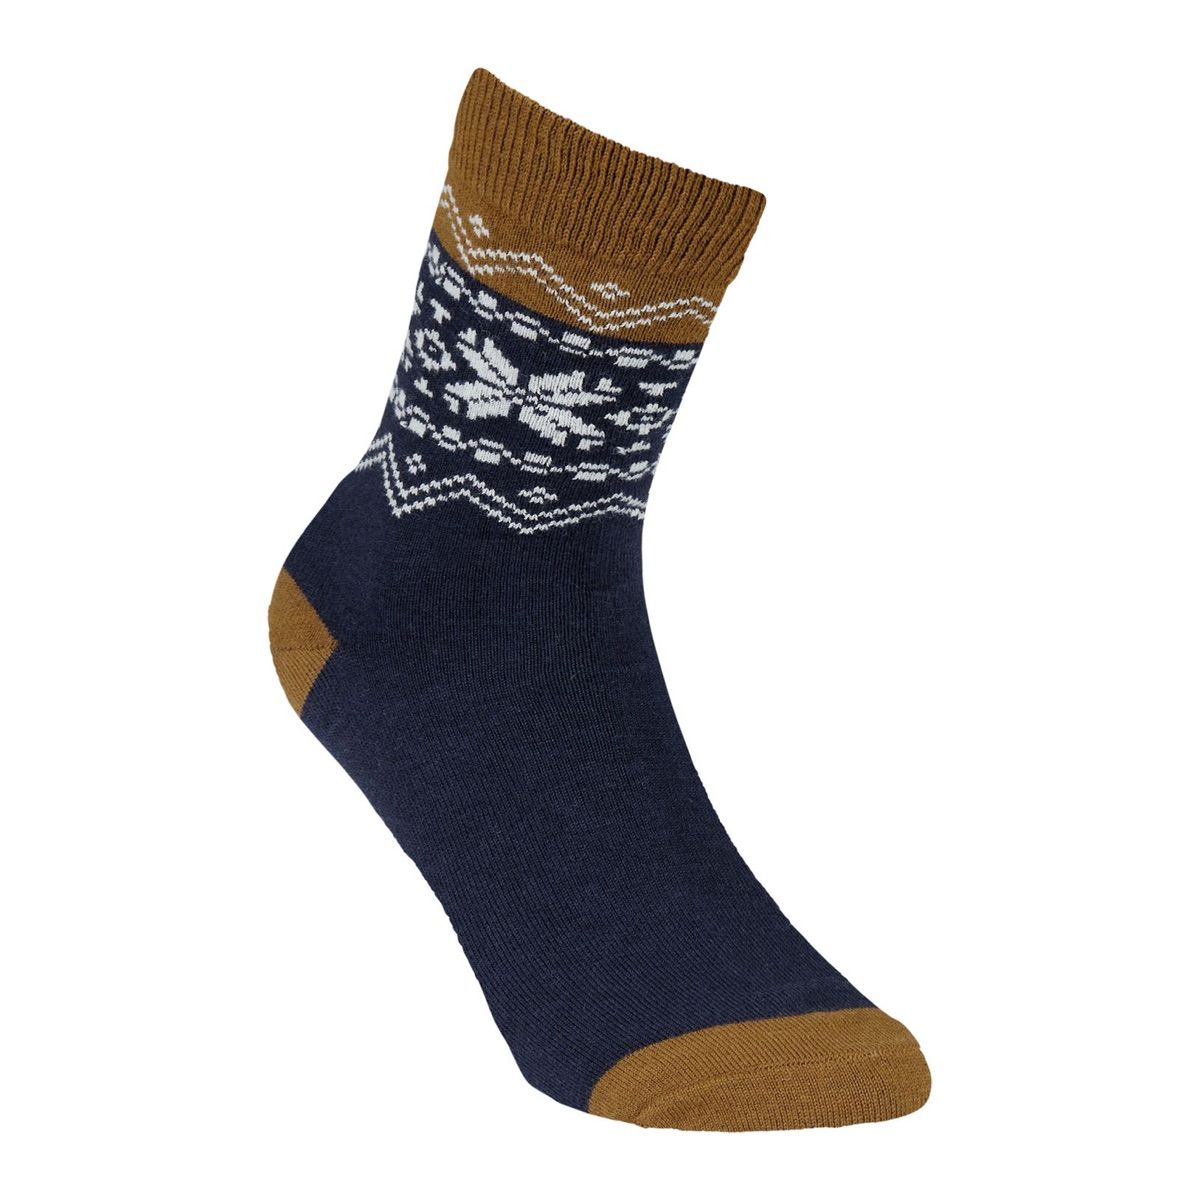 Gridarmor Heritage Merino Socks Navy Blue/Beige/White